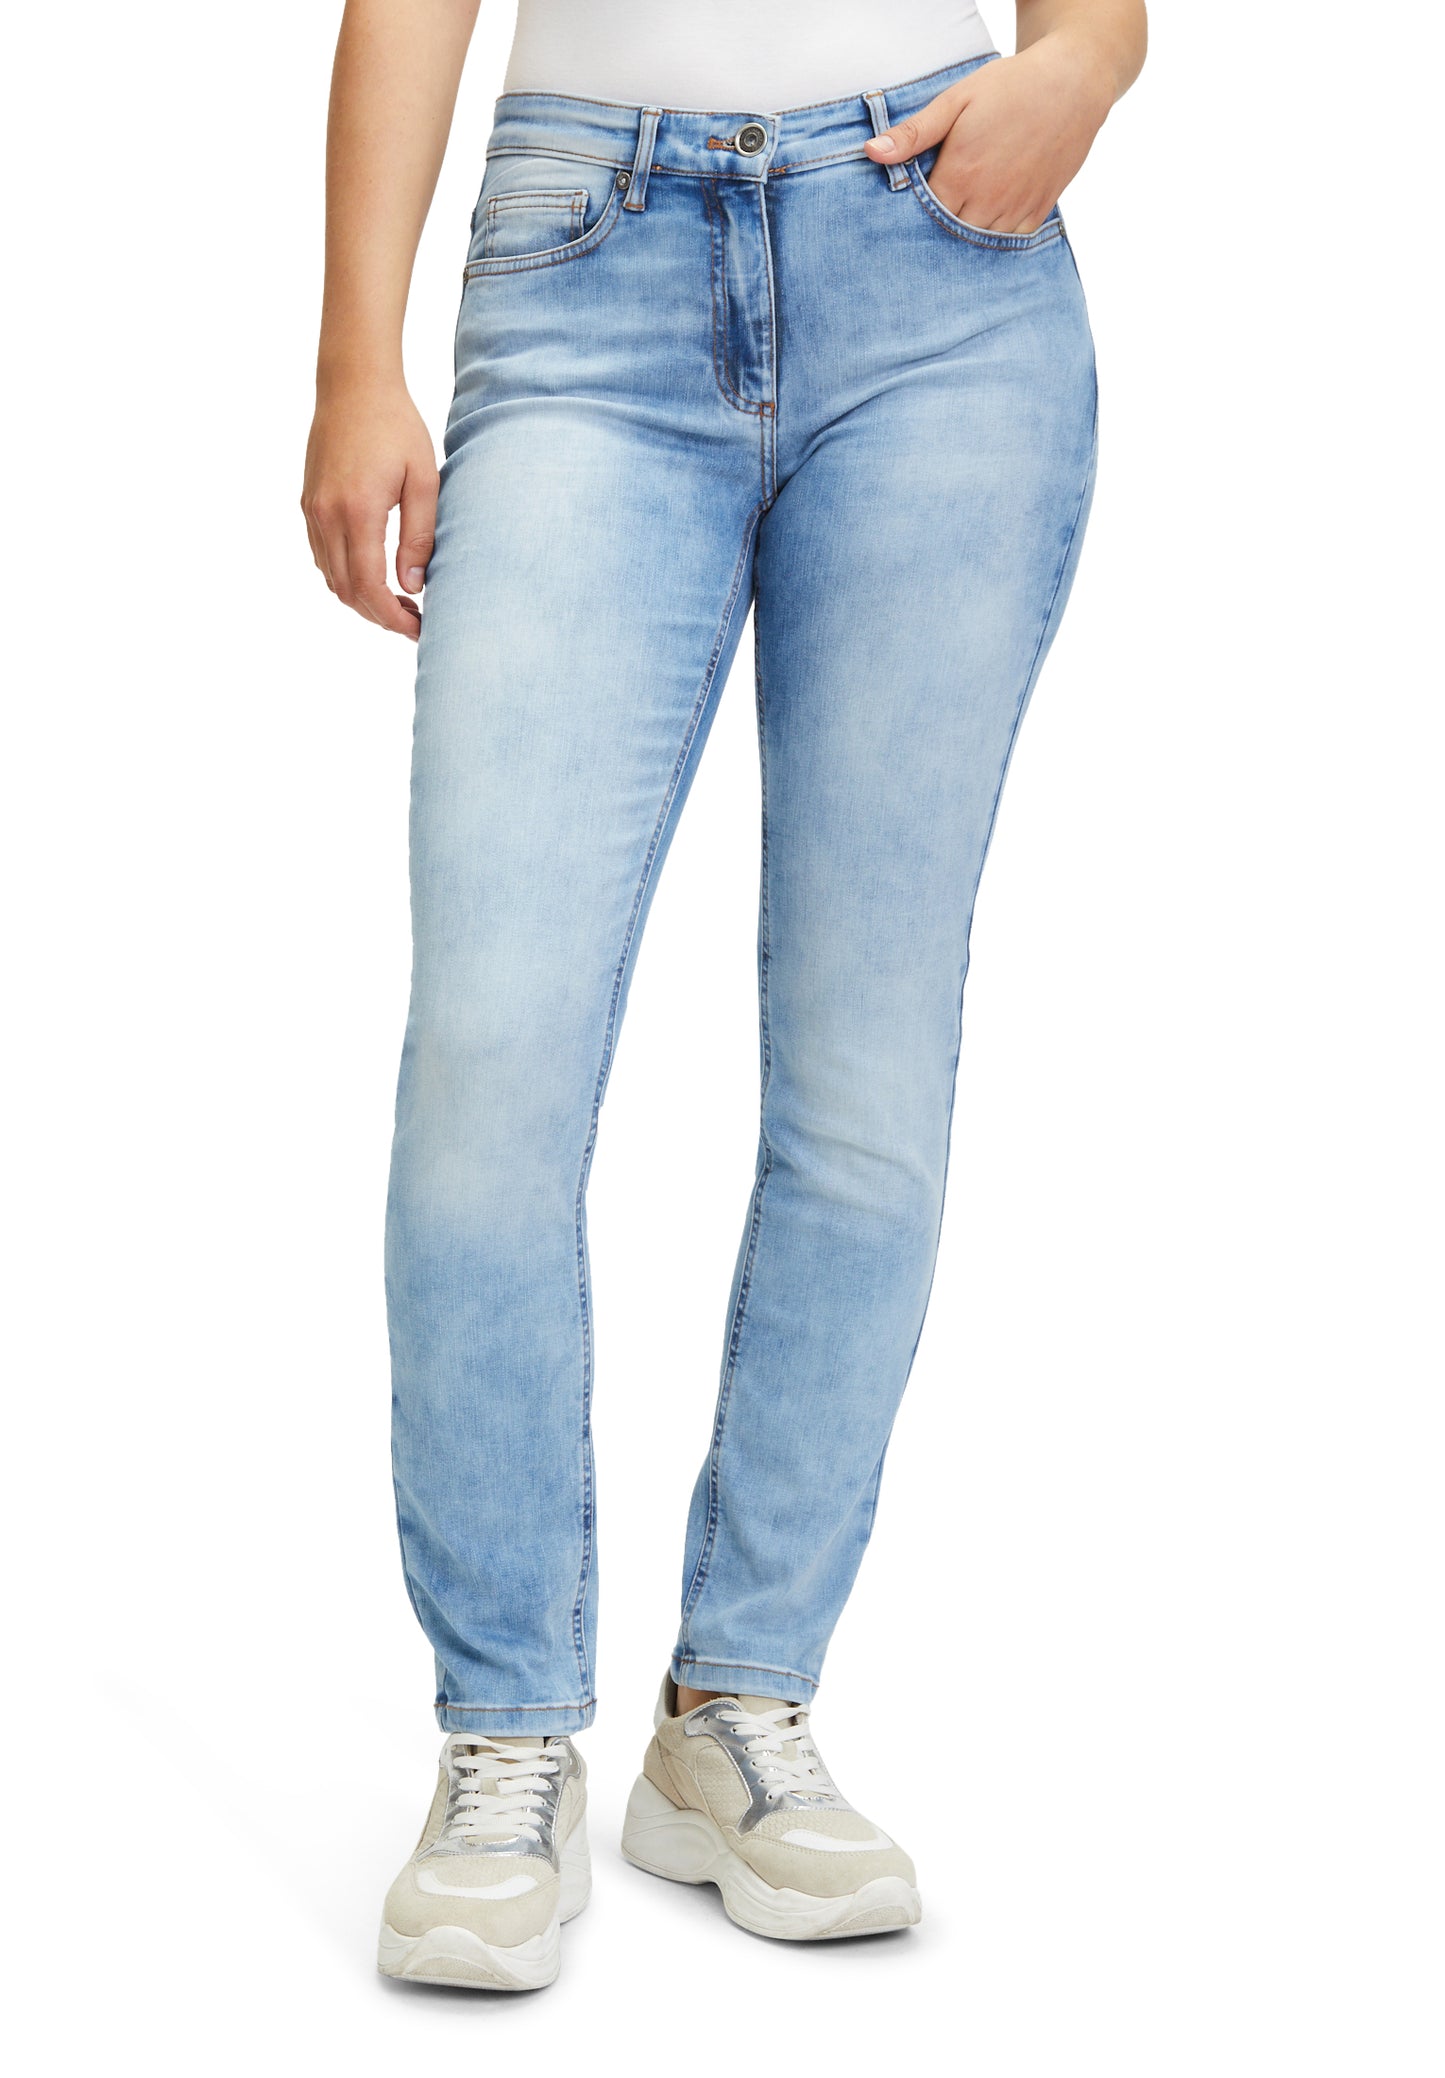 Betty Barclay 6662/1065 bleached denim skinny jeans